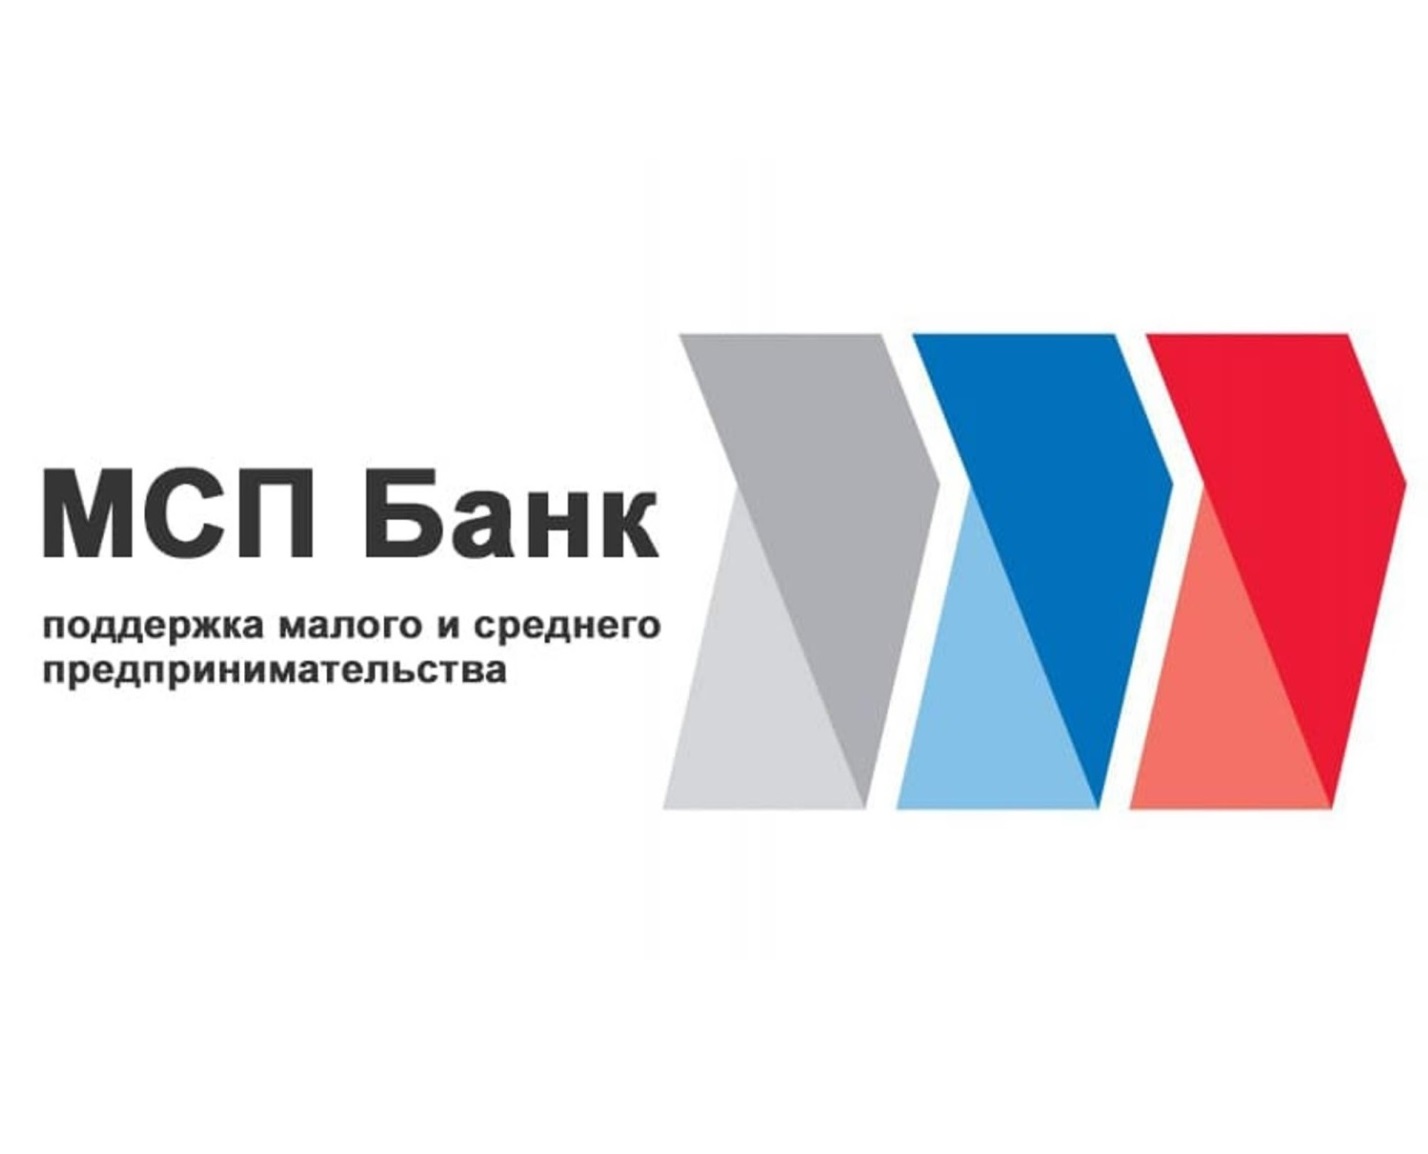 МСП получили более 1,7 млрд рублей микрозаймов через сервис на МСП.РФ.